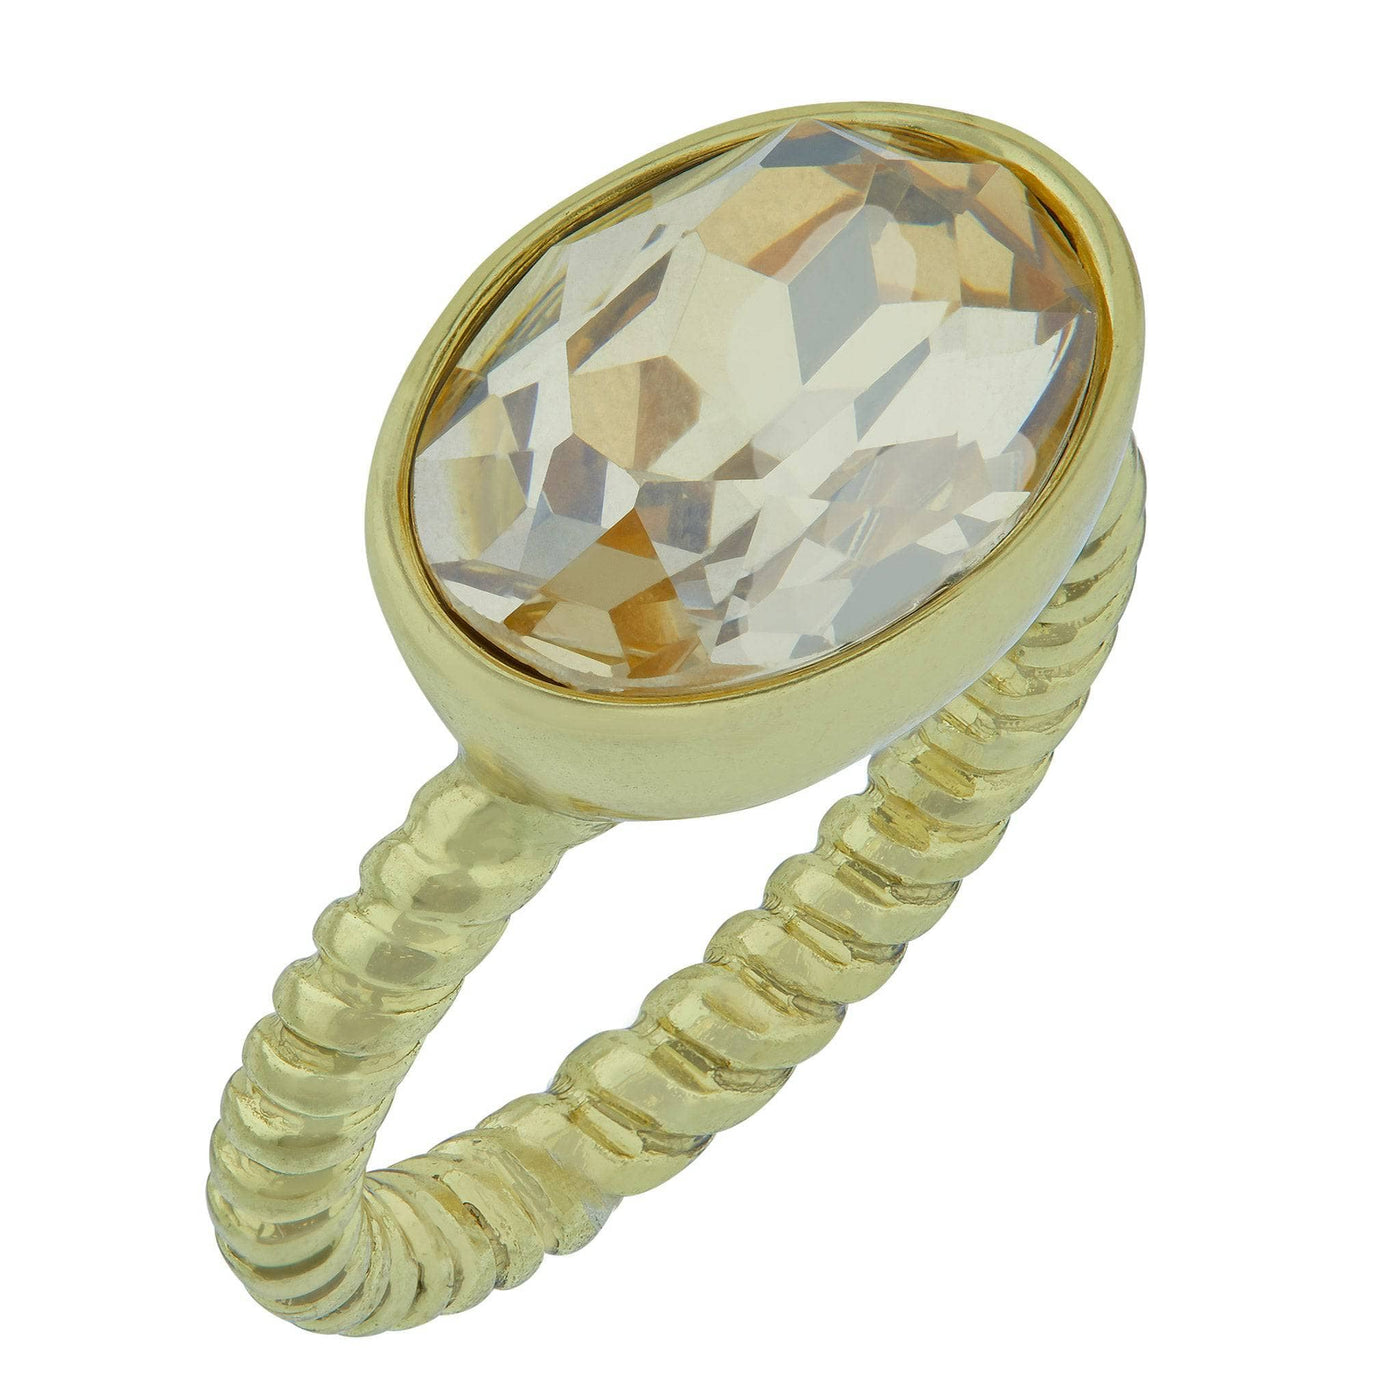 Heidi Daus®"Ring It Up" Crystal Oval Ring